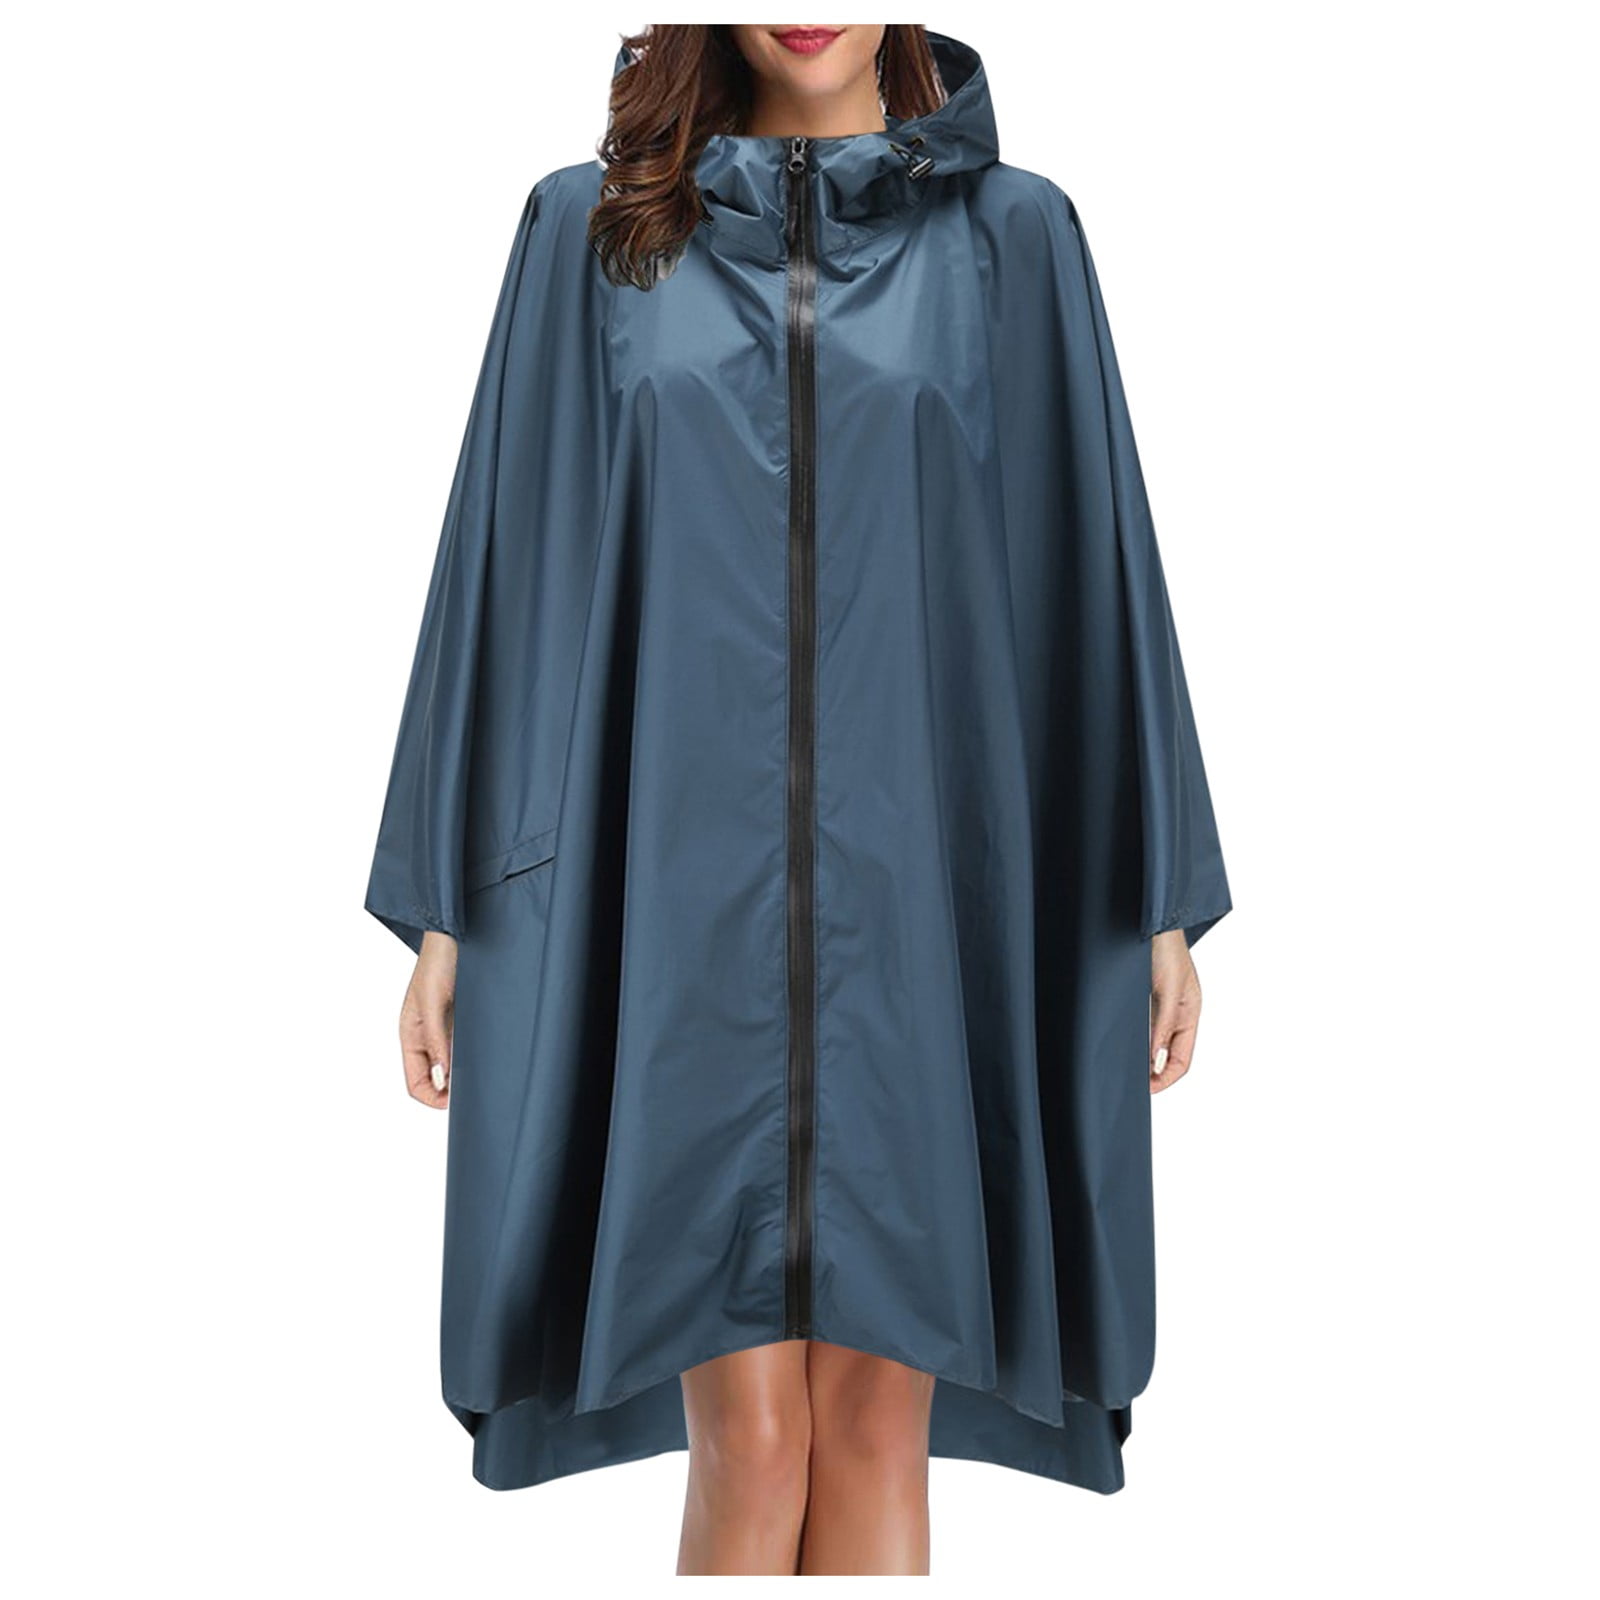 yuehao umbrella raincoat unisex rain coat with pockets jacket hooded teens  for adults fashion umbrella blue